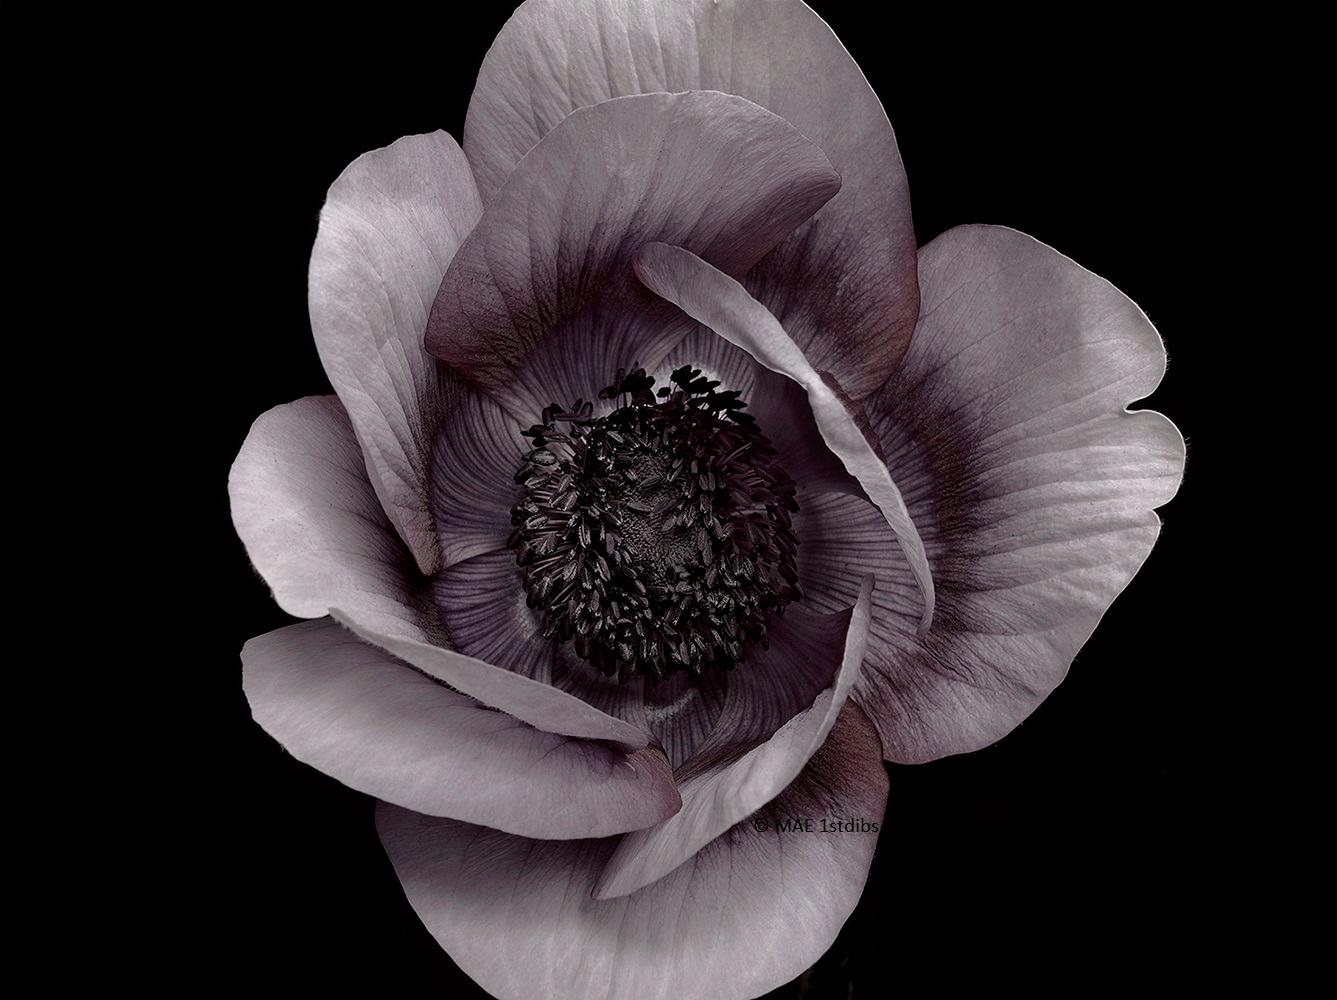 M.V. Still-Life Photograph - Photography - Flower Series (30 x 40 image)